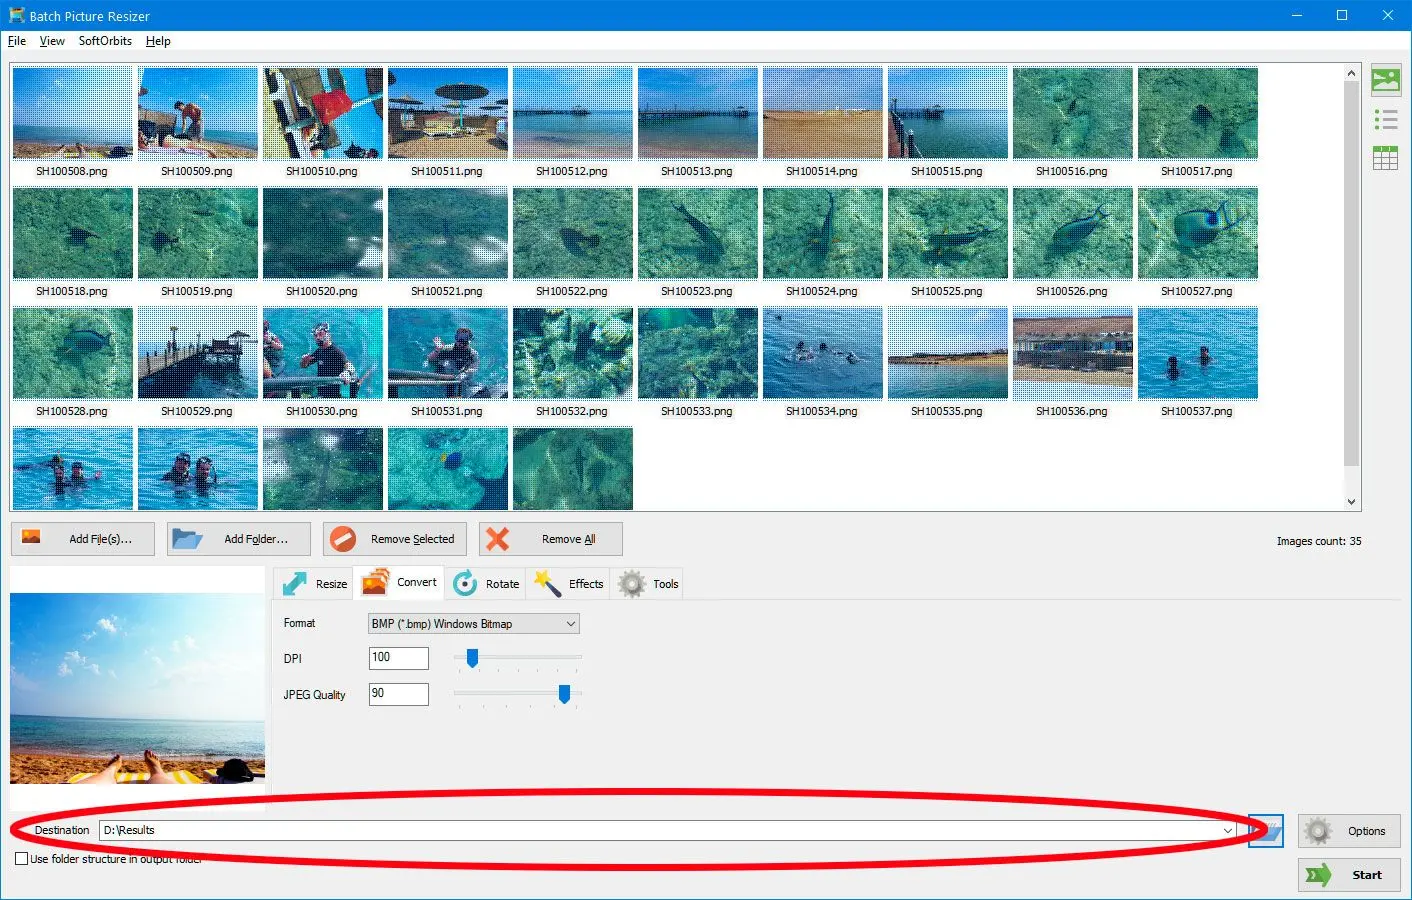 Choose destination folder in Batch Picture Resizer..